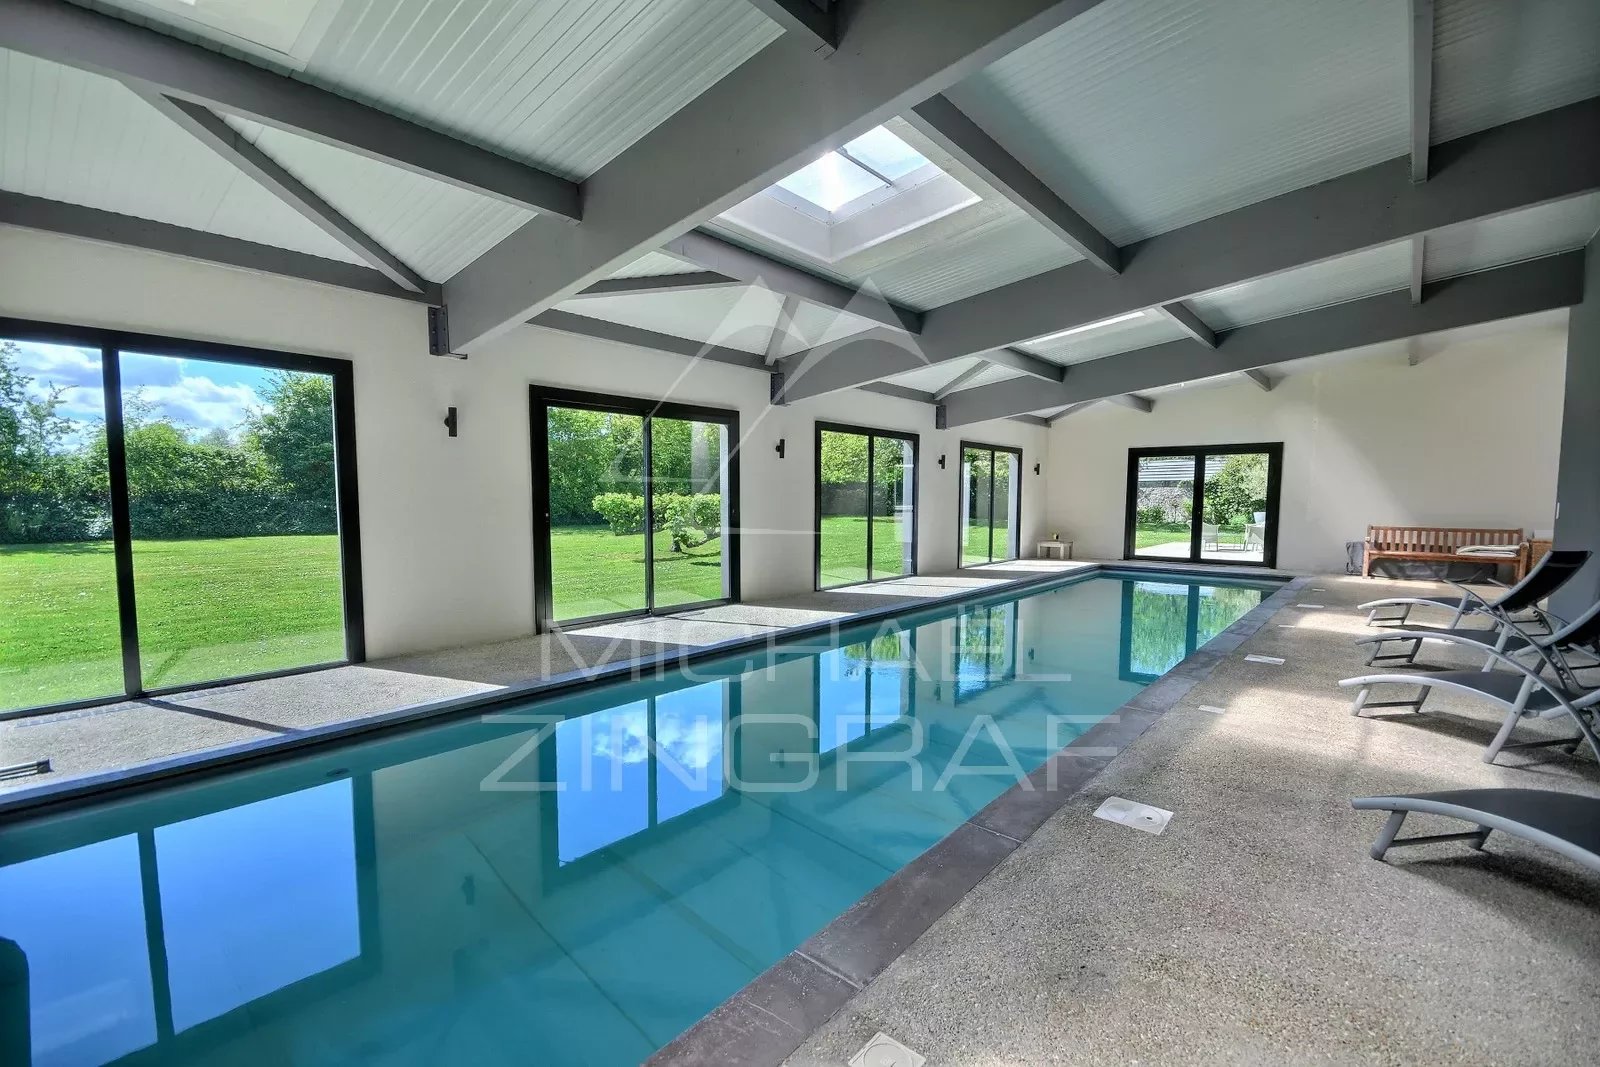 Côte de Grâce, house with indoor pool